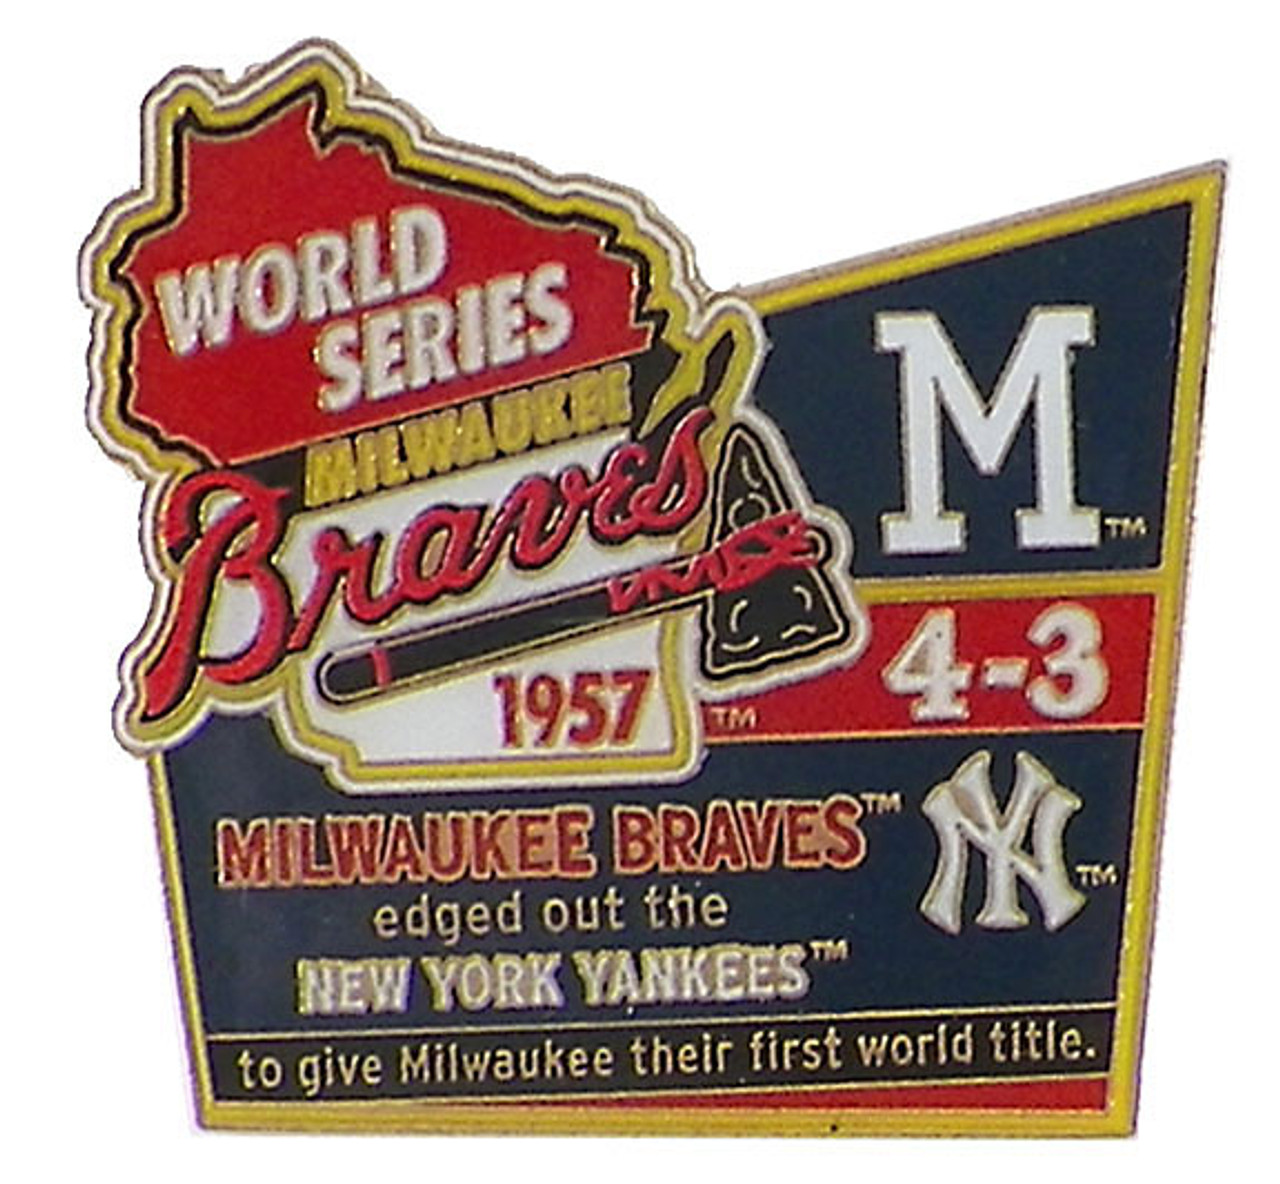 Atlanta Braves World Series WINS! (1957 and 1995 World Series champions) 